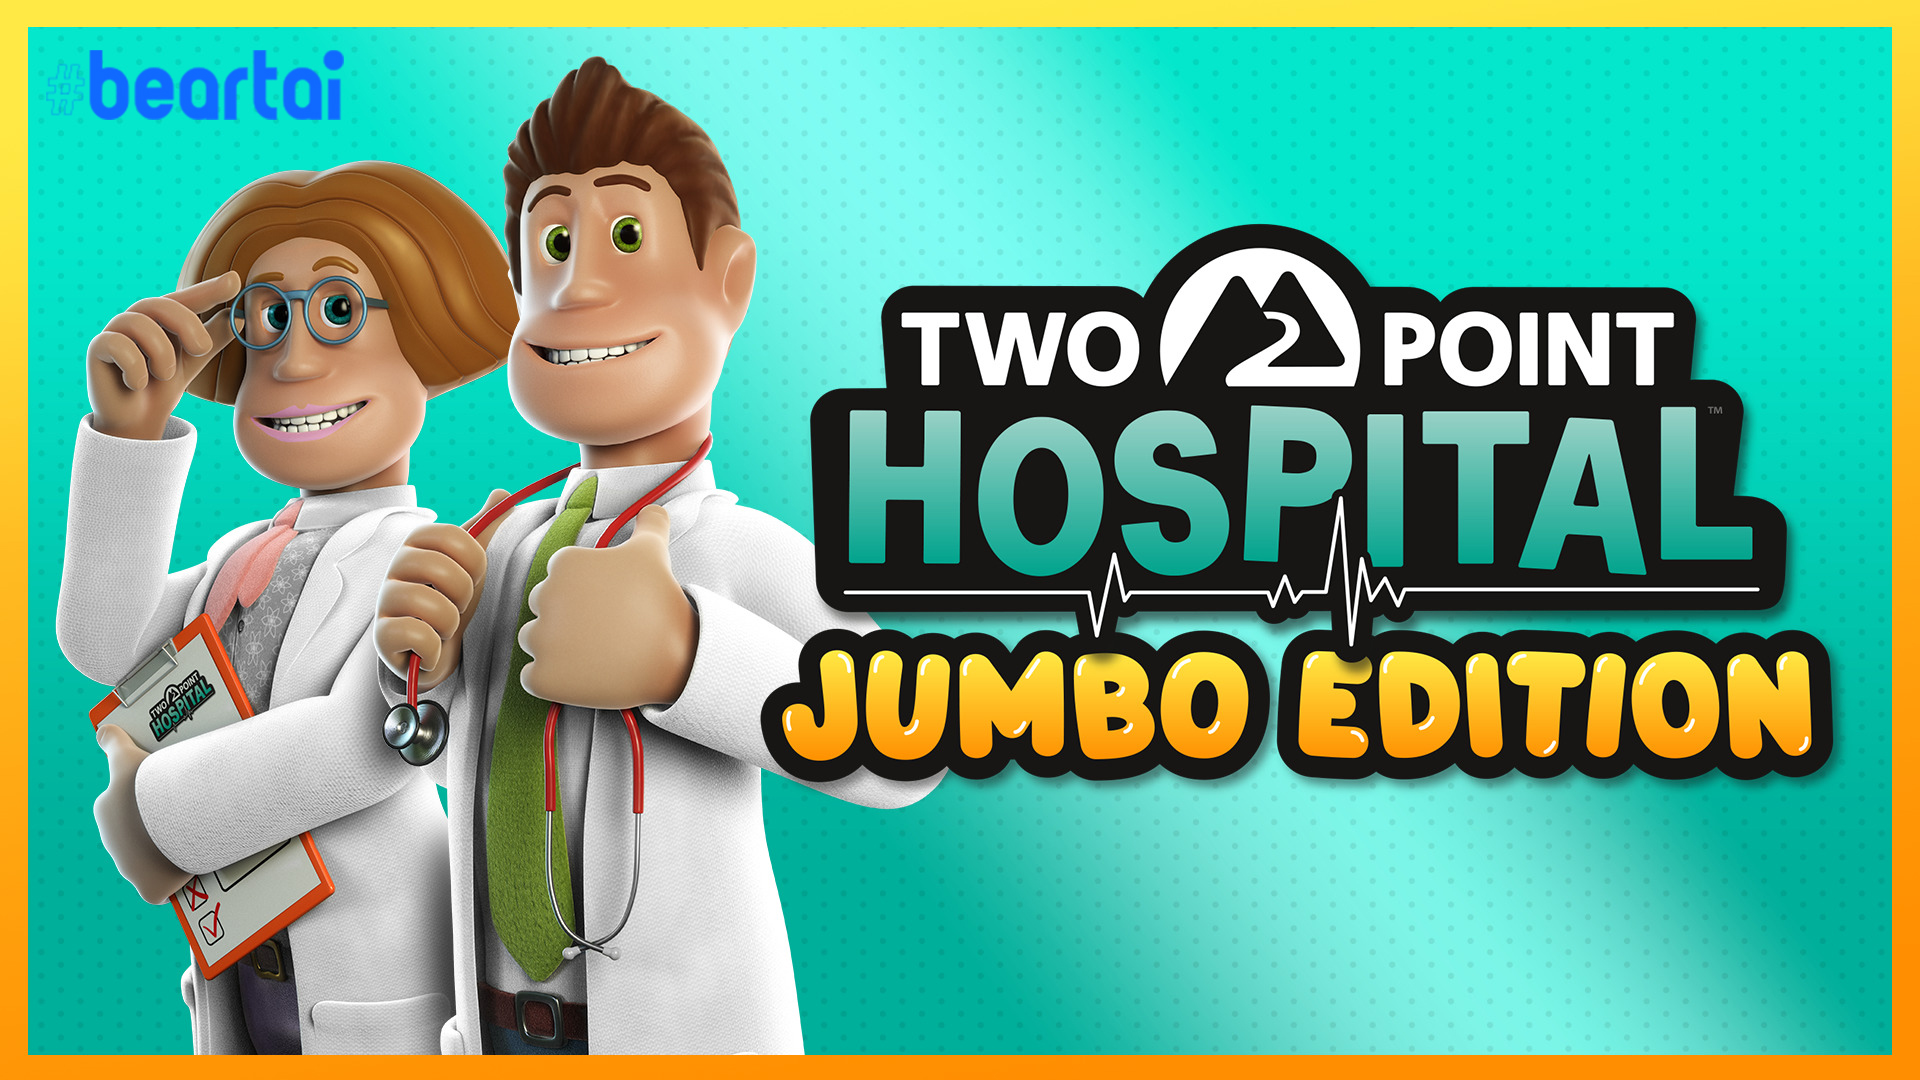 Two Point Hospital: JUMBO Edition เตรียมวางจำหน่าย 5 มี.ค. นี้